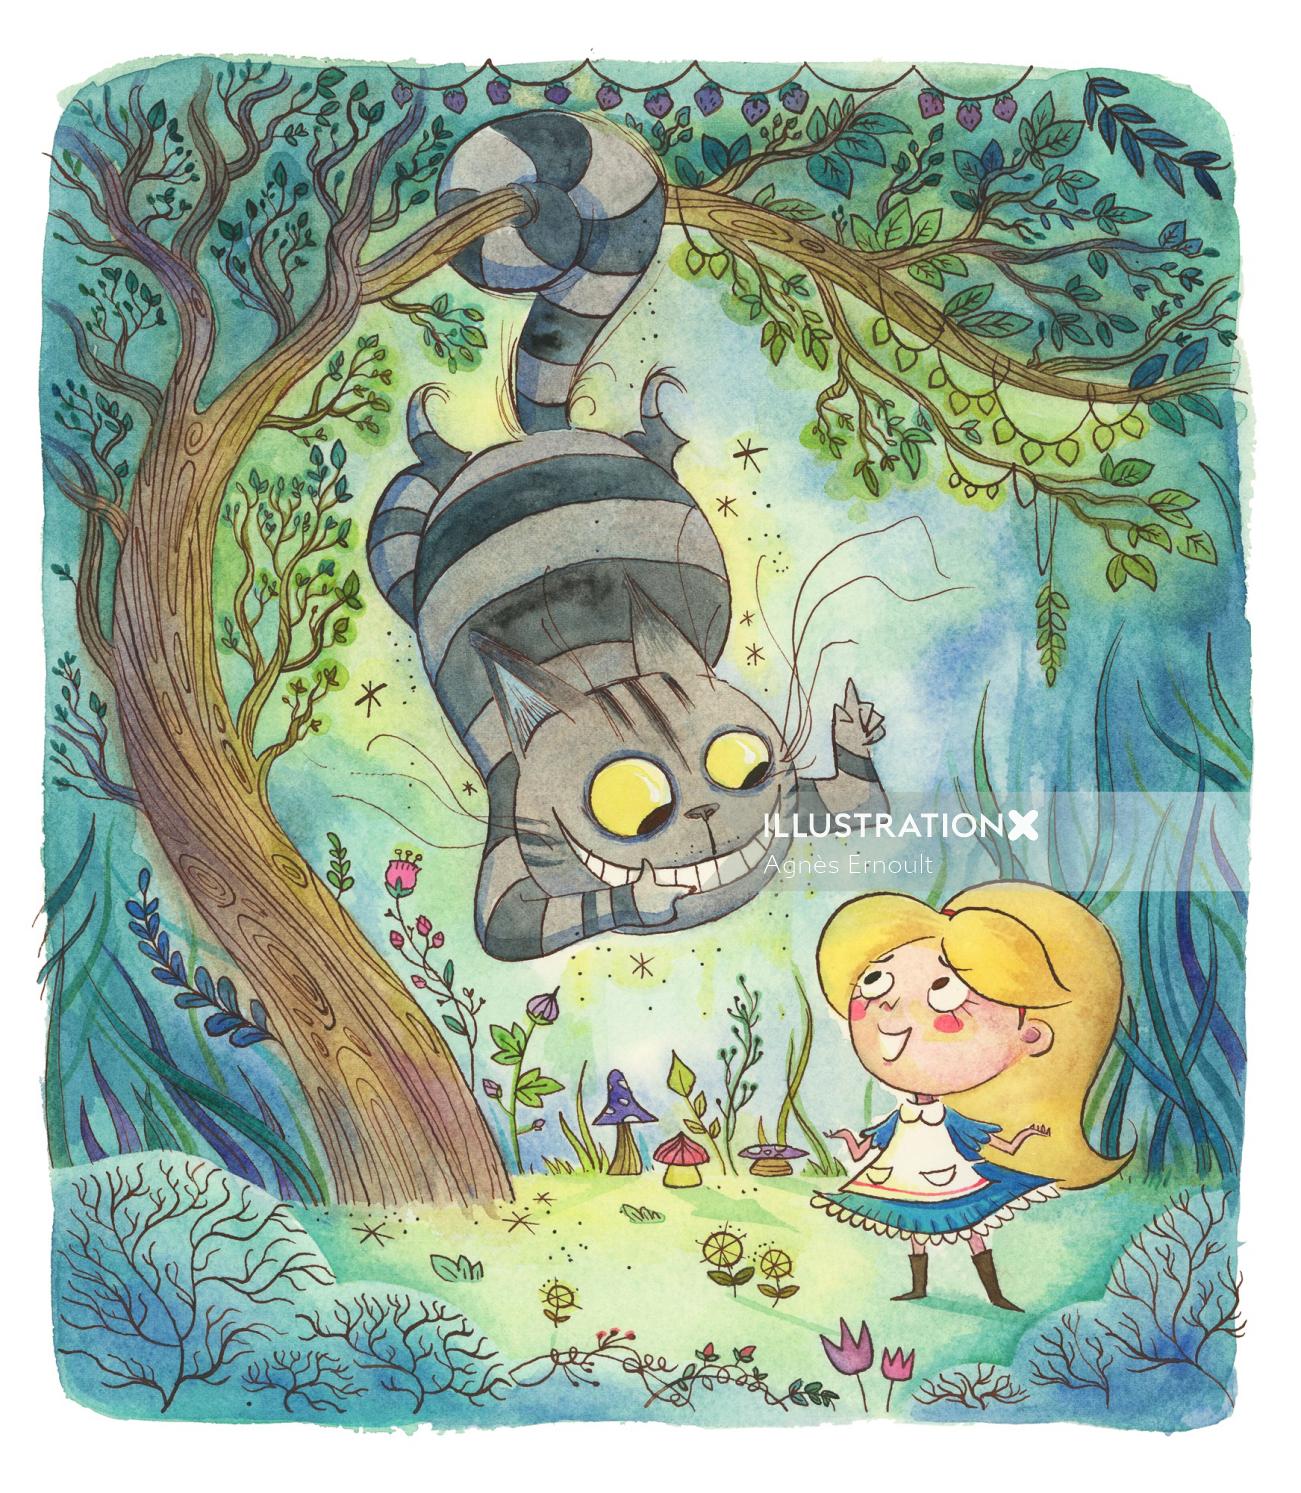 Fantasy children books cover Alice in wonderland